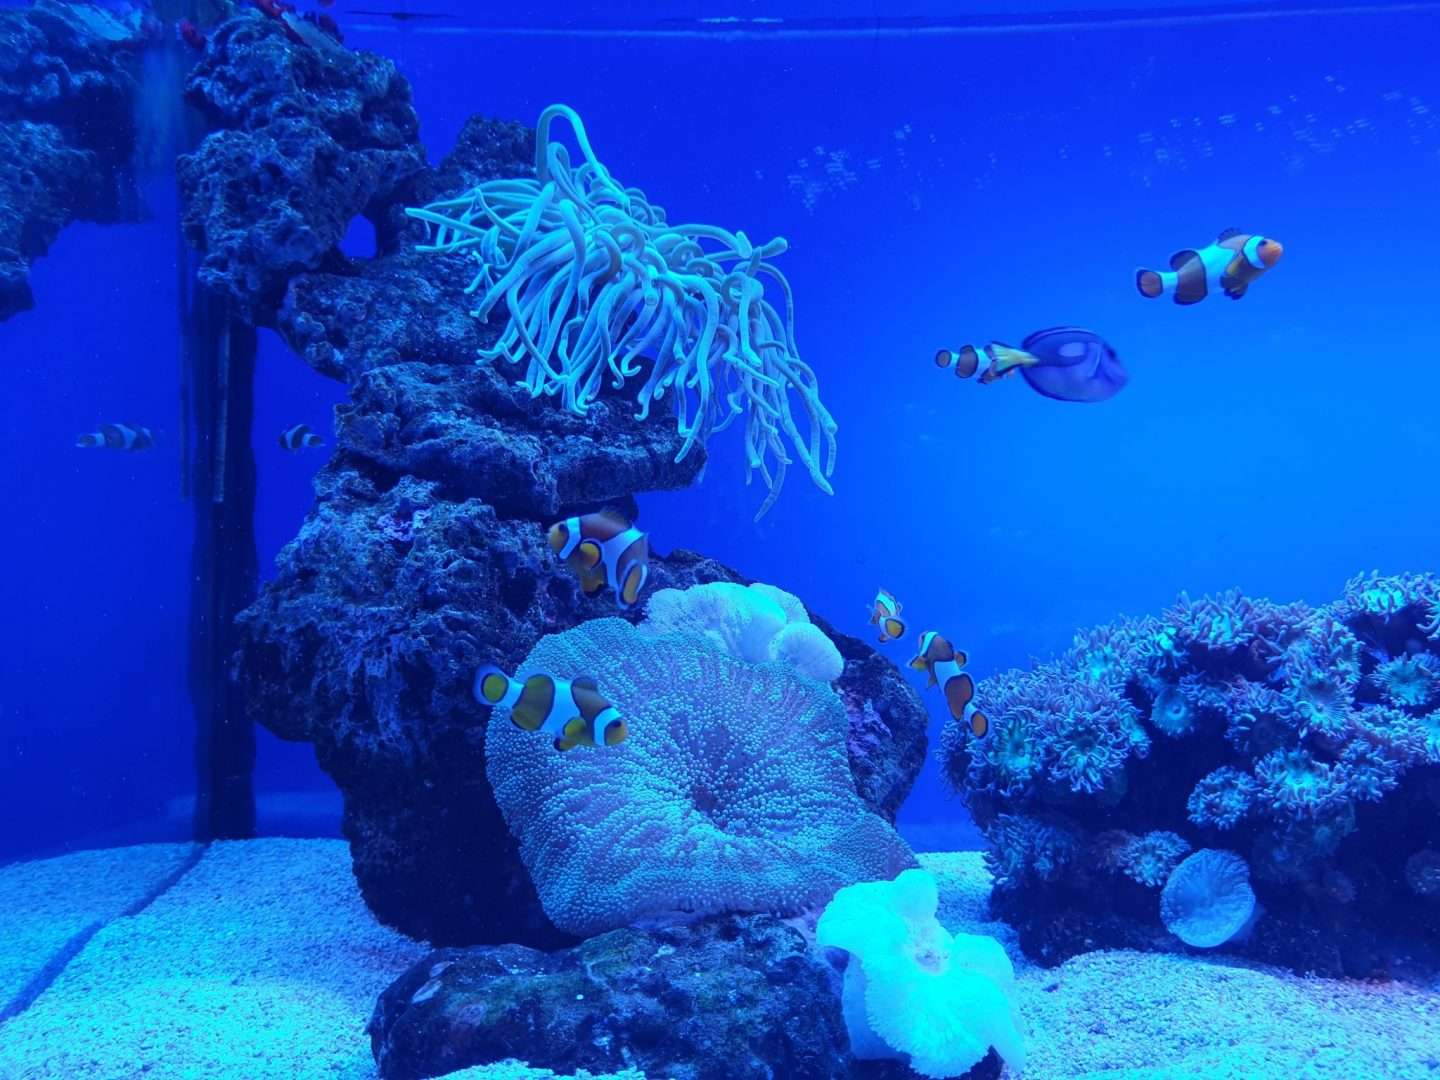 Palma Aquarium in Mallorca, Spain